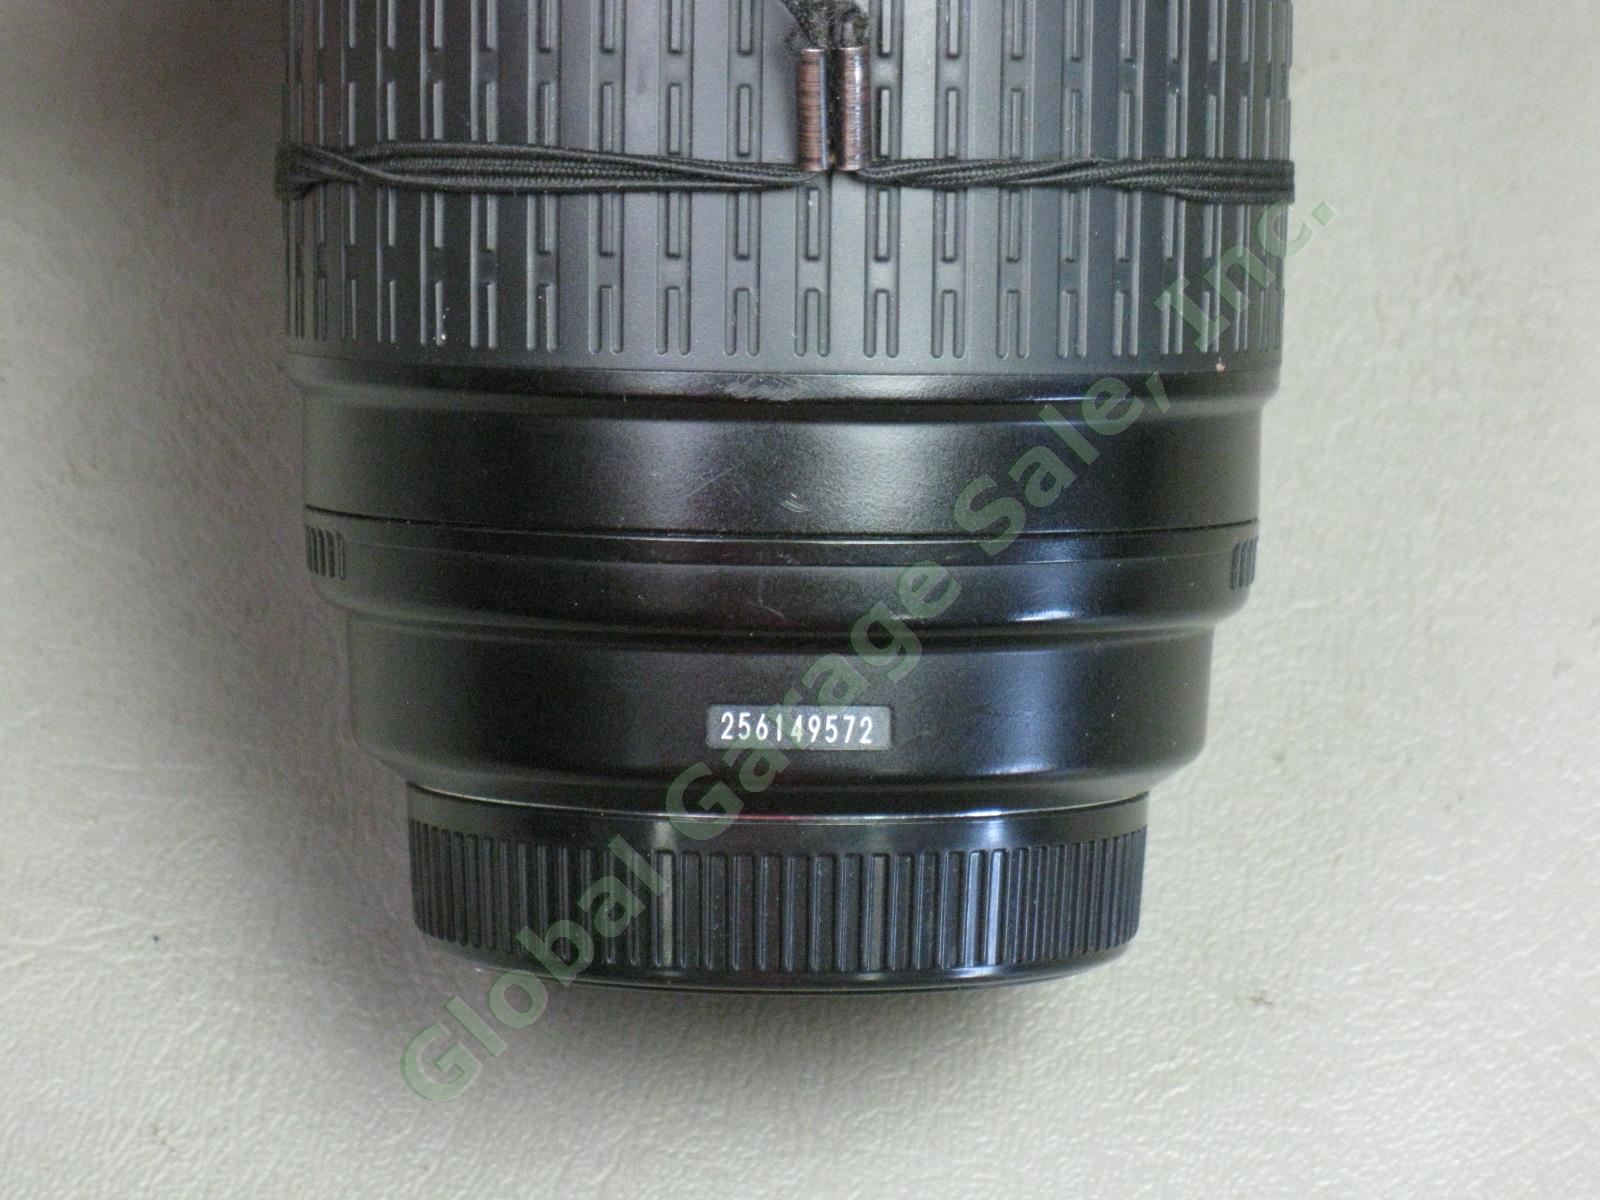 Olympus Zuiko 70-300mm f/4-5.6 ED Digital Zoom Camera Lens For 4/3 Four Thirds 4